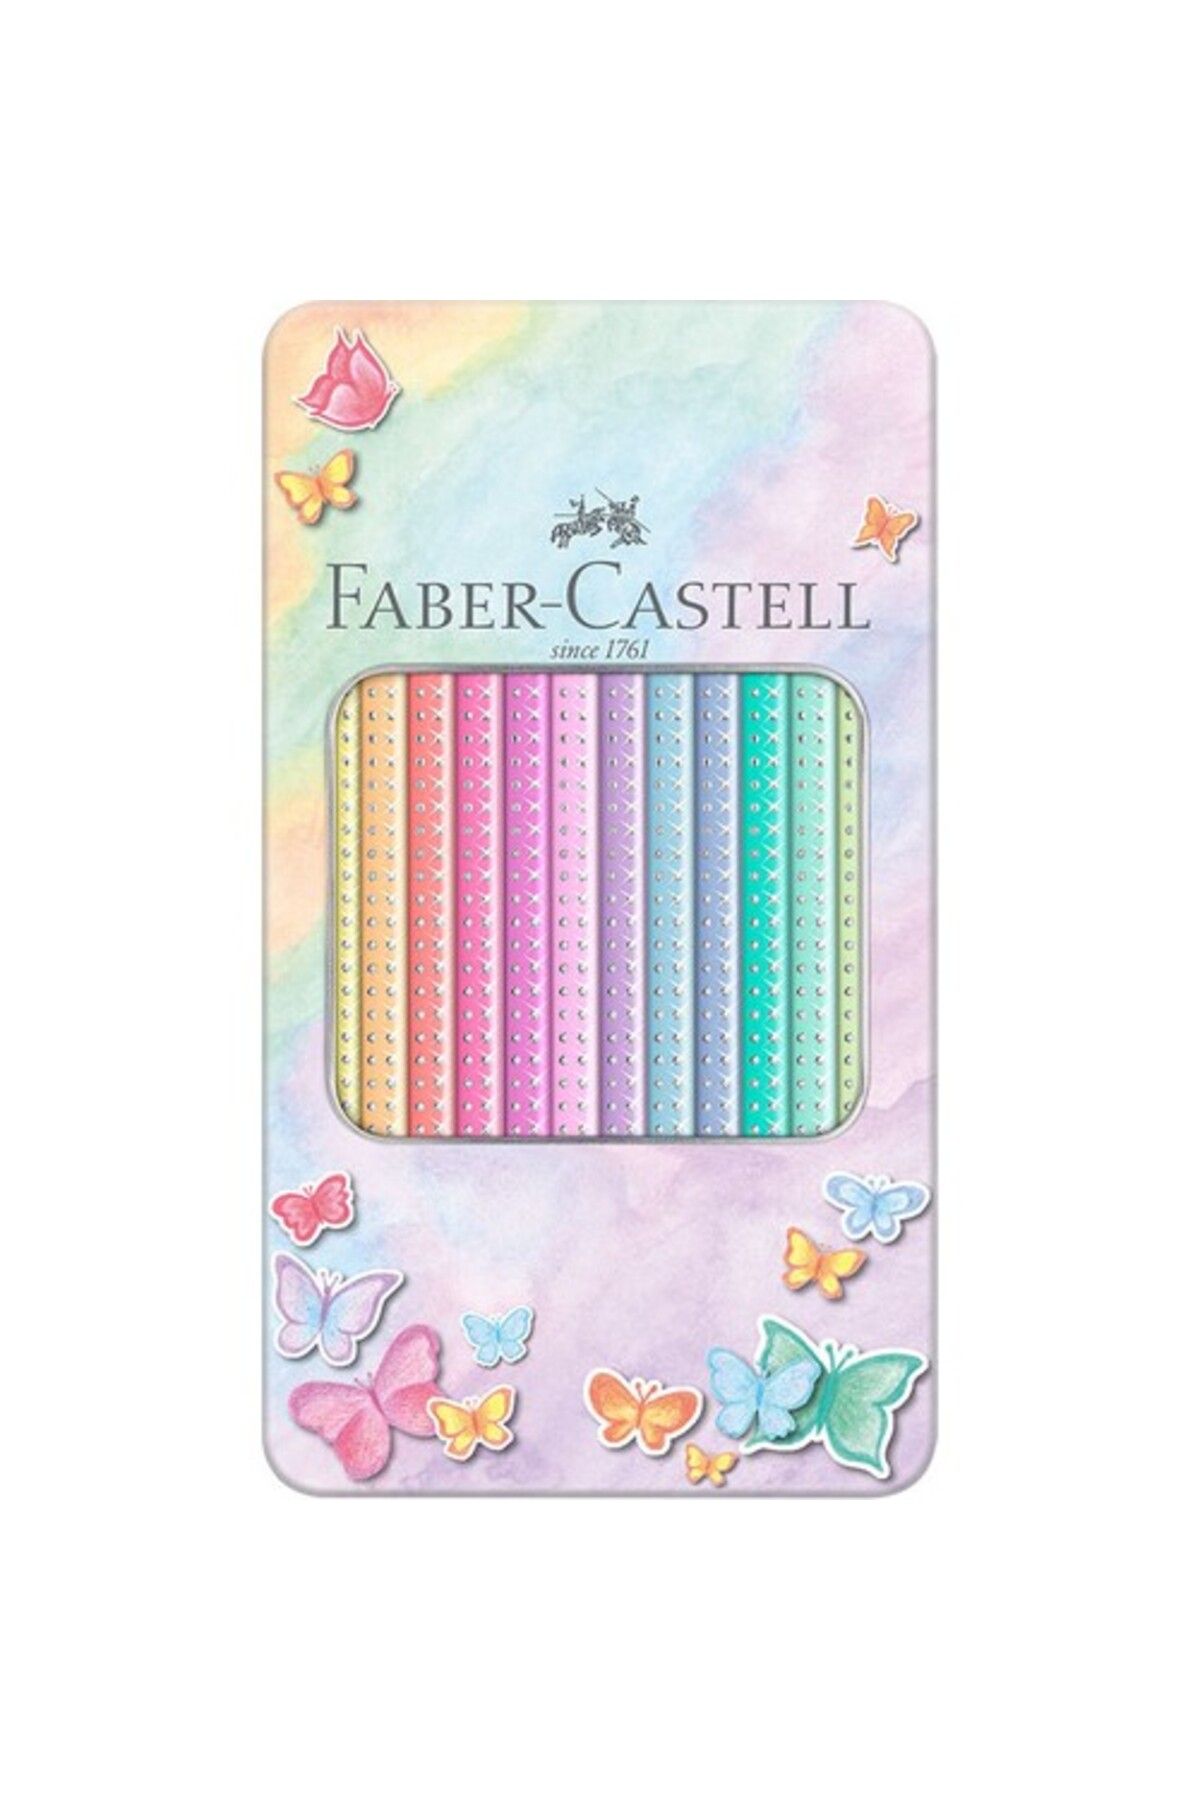 Faber Castell Fabre Castell Parlak Renkler Pastel Boya Kalem 12 Li